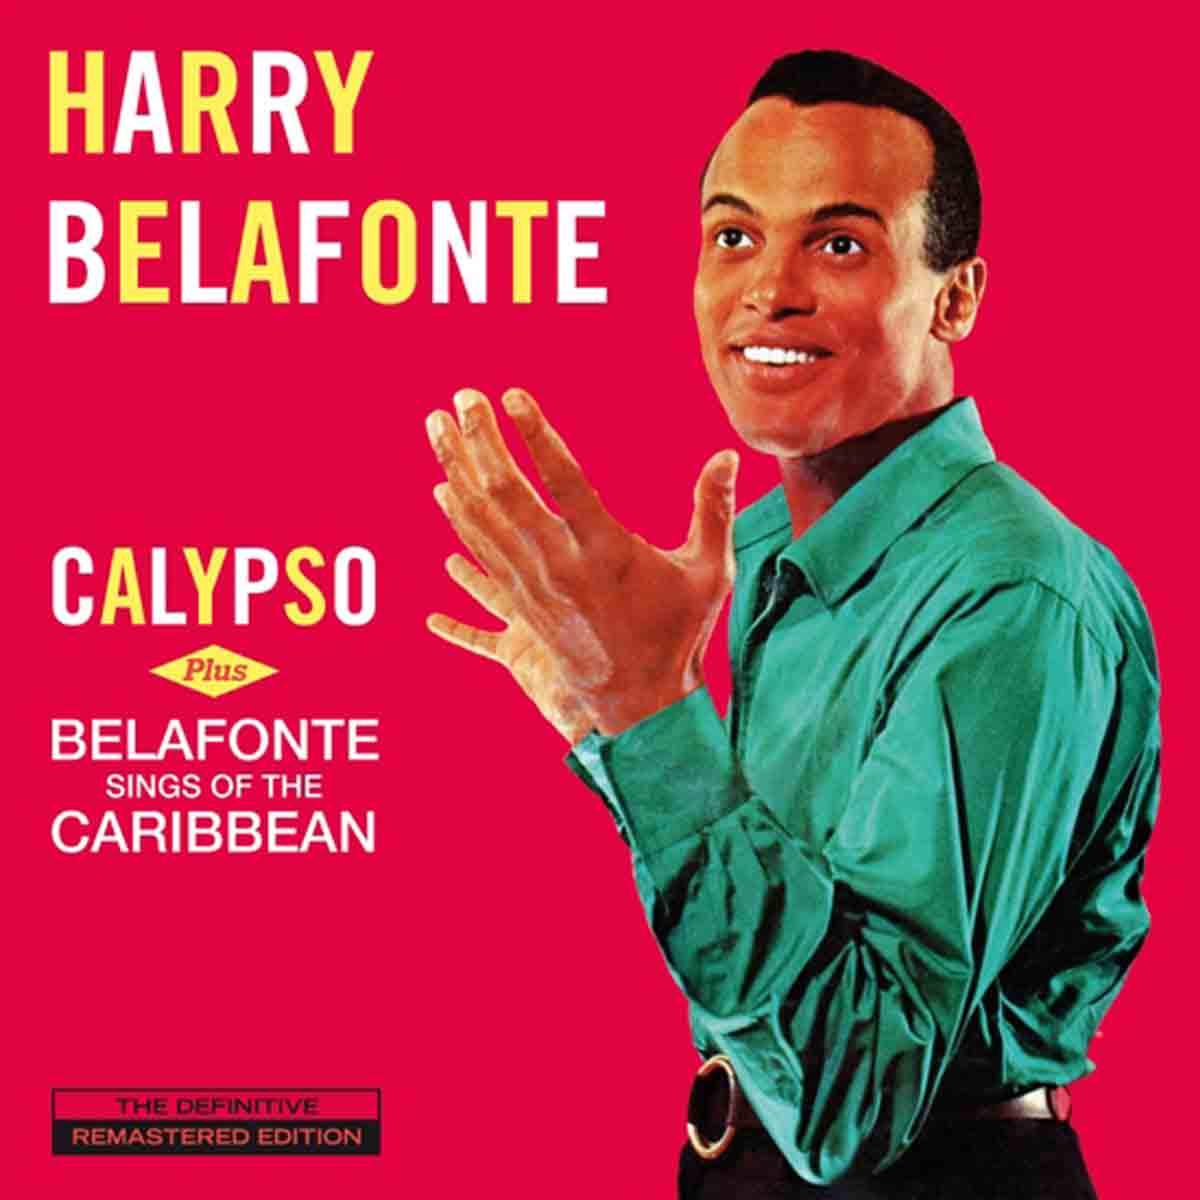 Calypso + Belafonte Sings Of The Caribbean + 3 Bonus Tracks